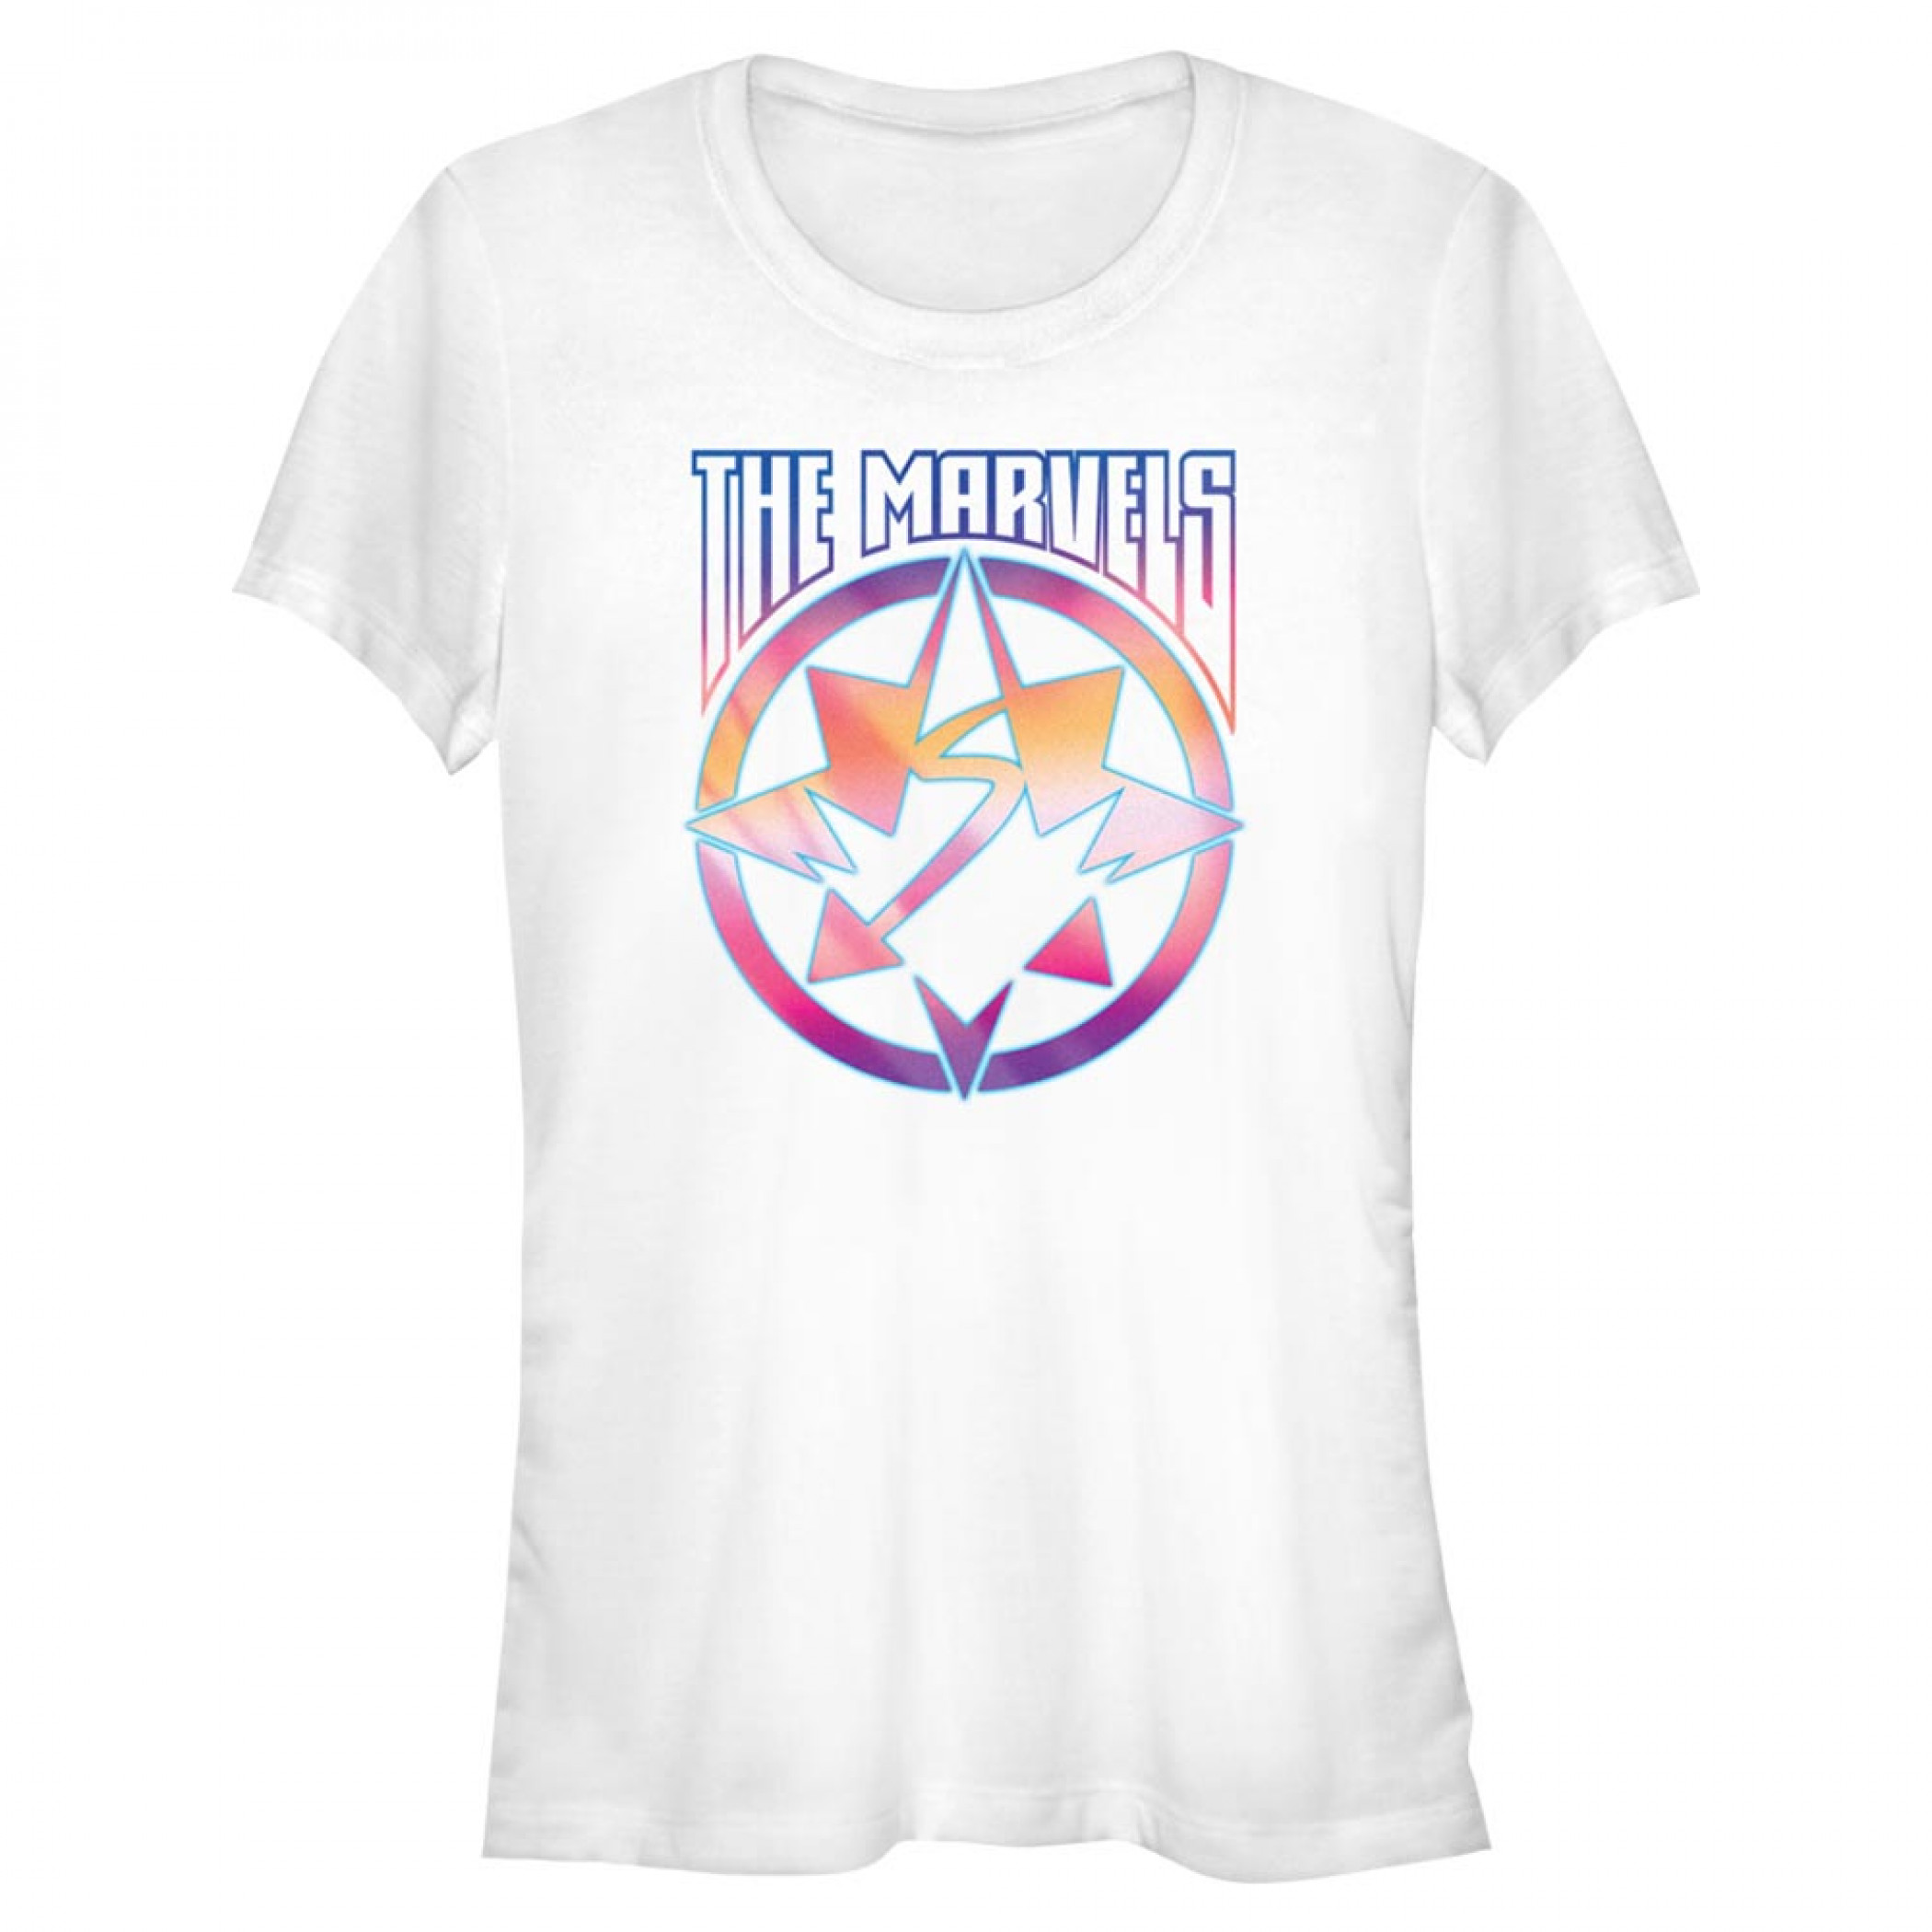 The Marvels Pastel Crest Junior's Crew T-Shirt